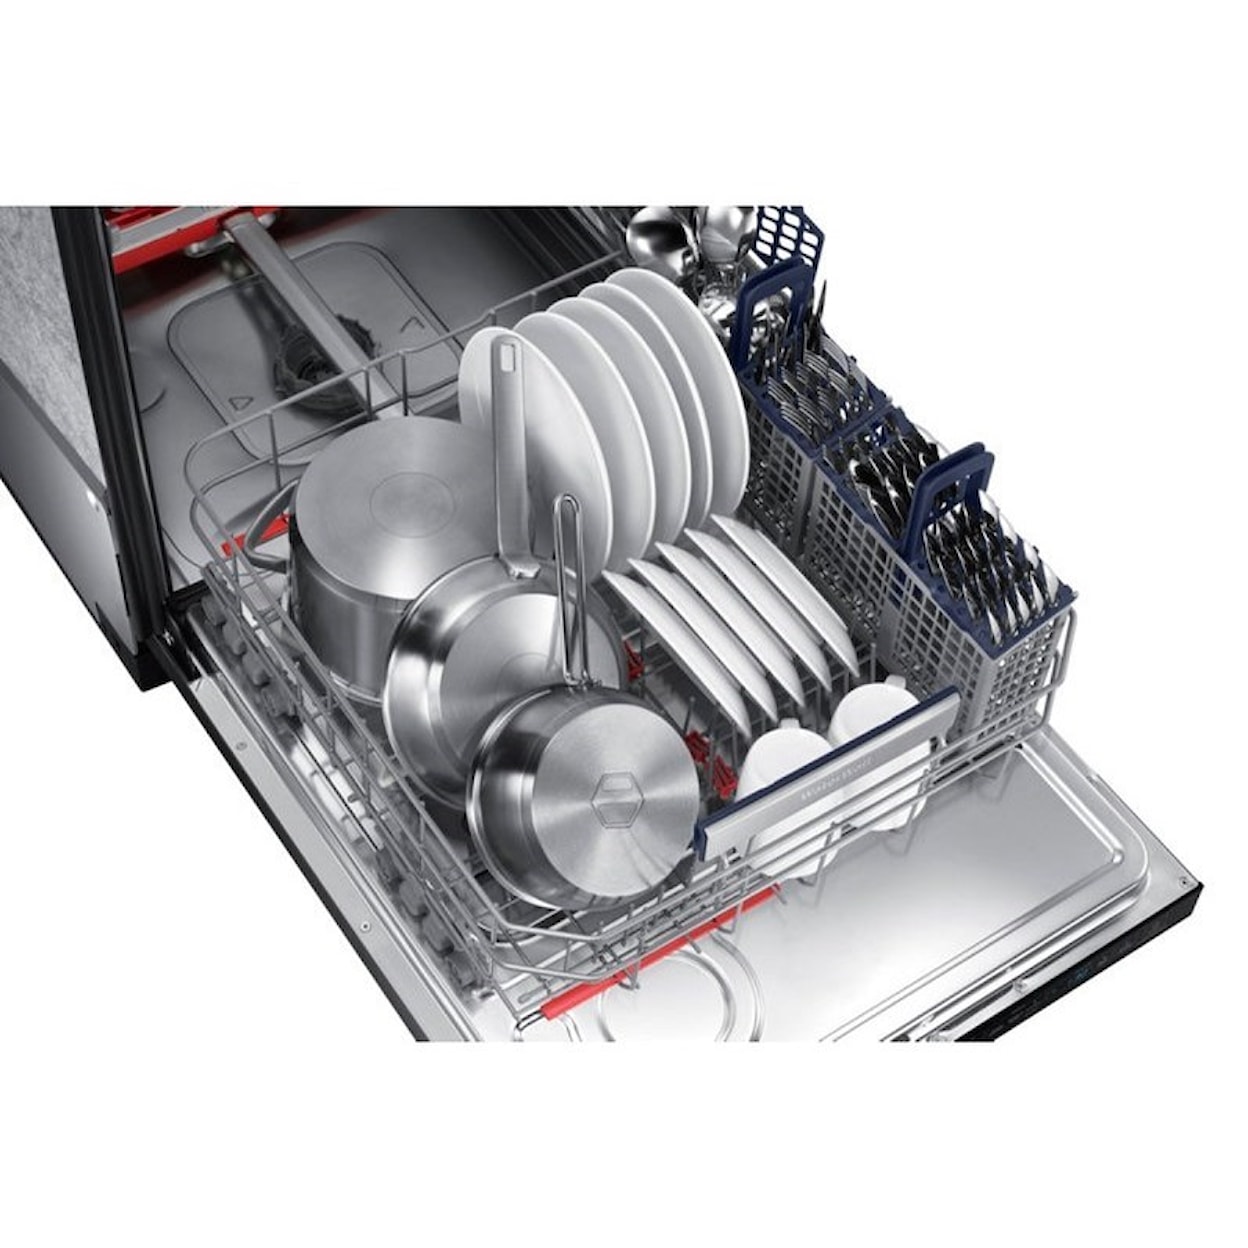 Samsung Appliances Dishwashers Top Control Dishwasher